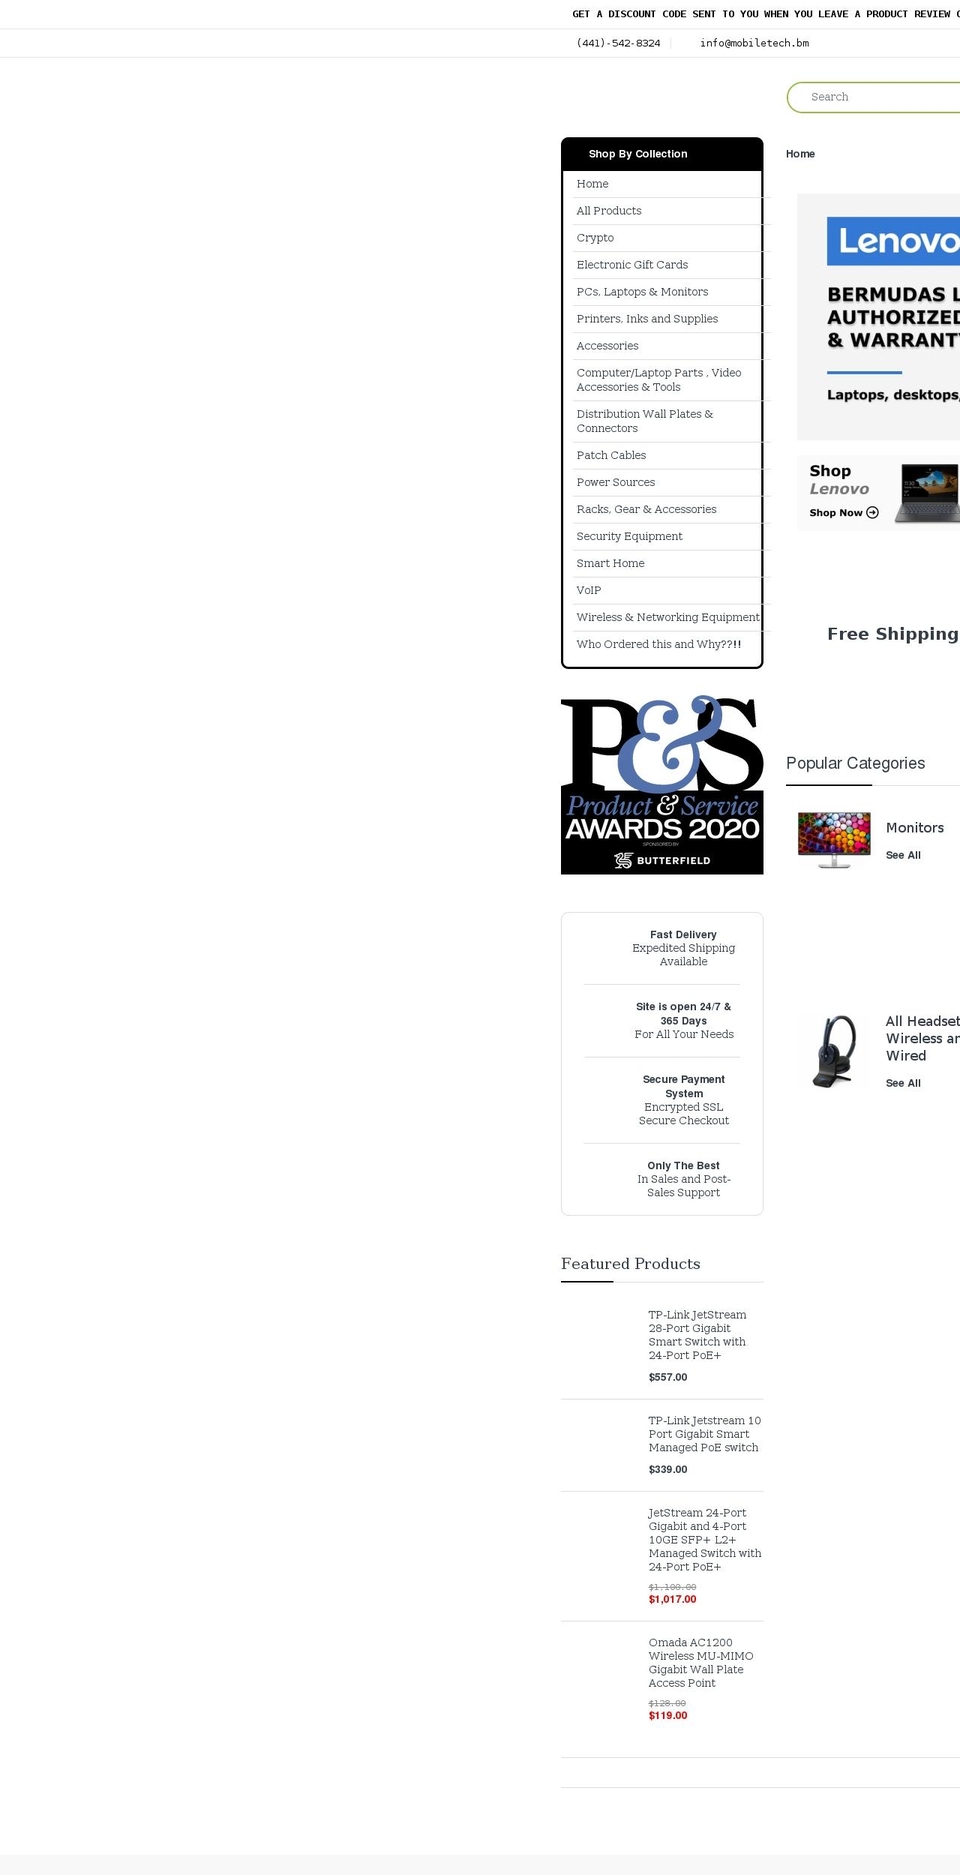 mobiletech.bm shopify website screenshot